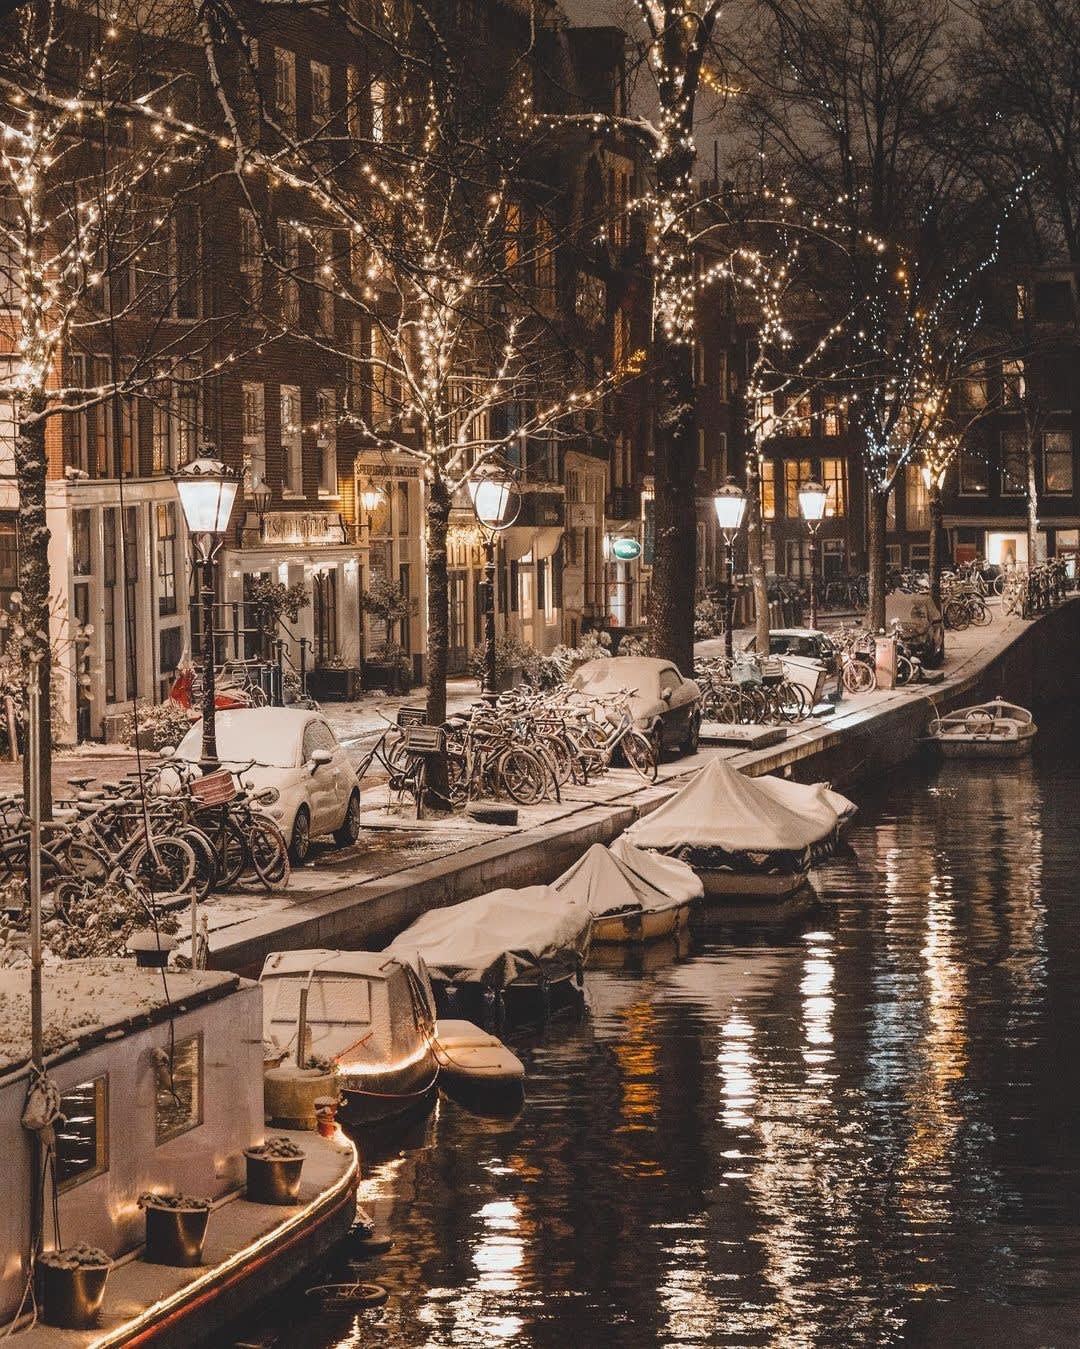 A snowy evening in Amsterdam